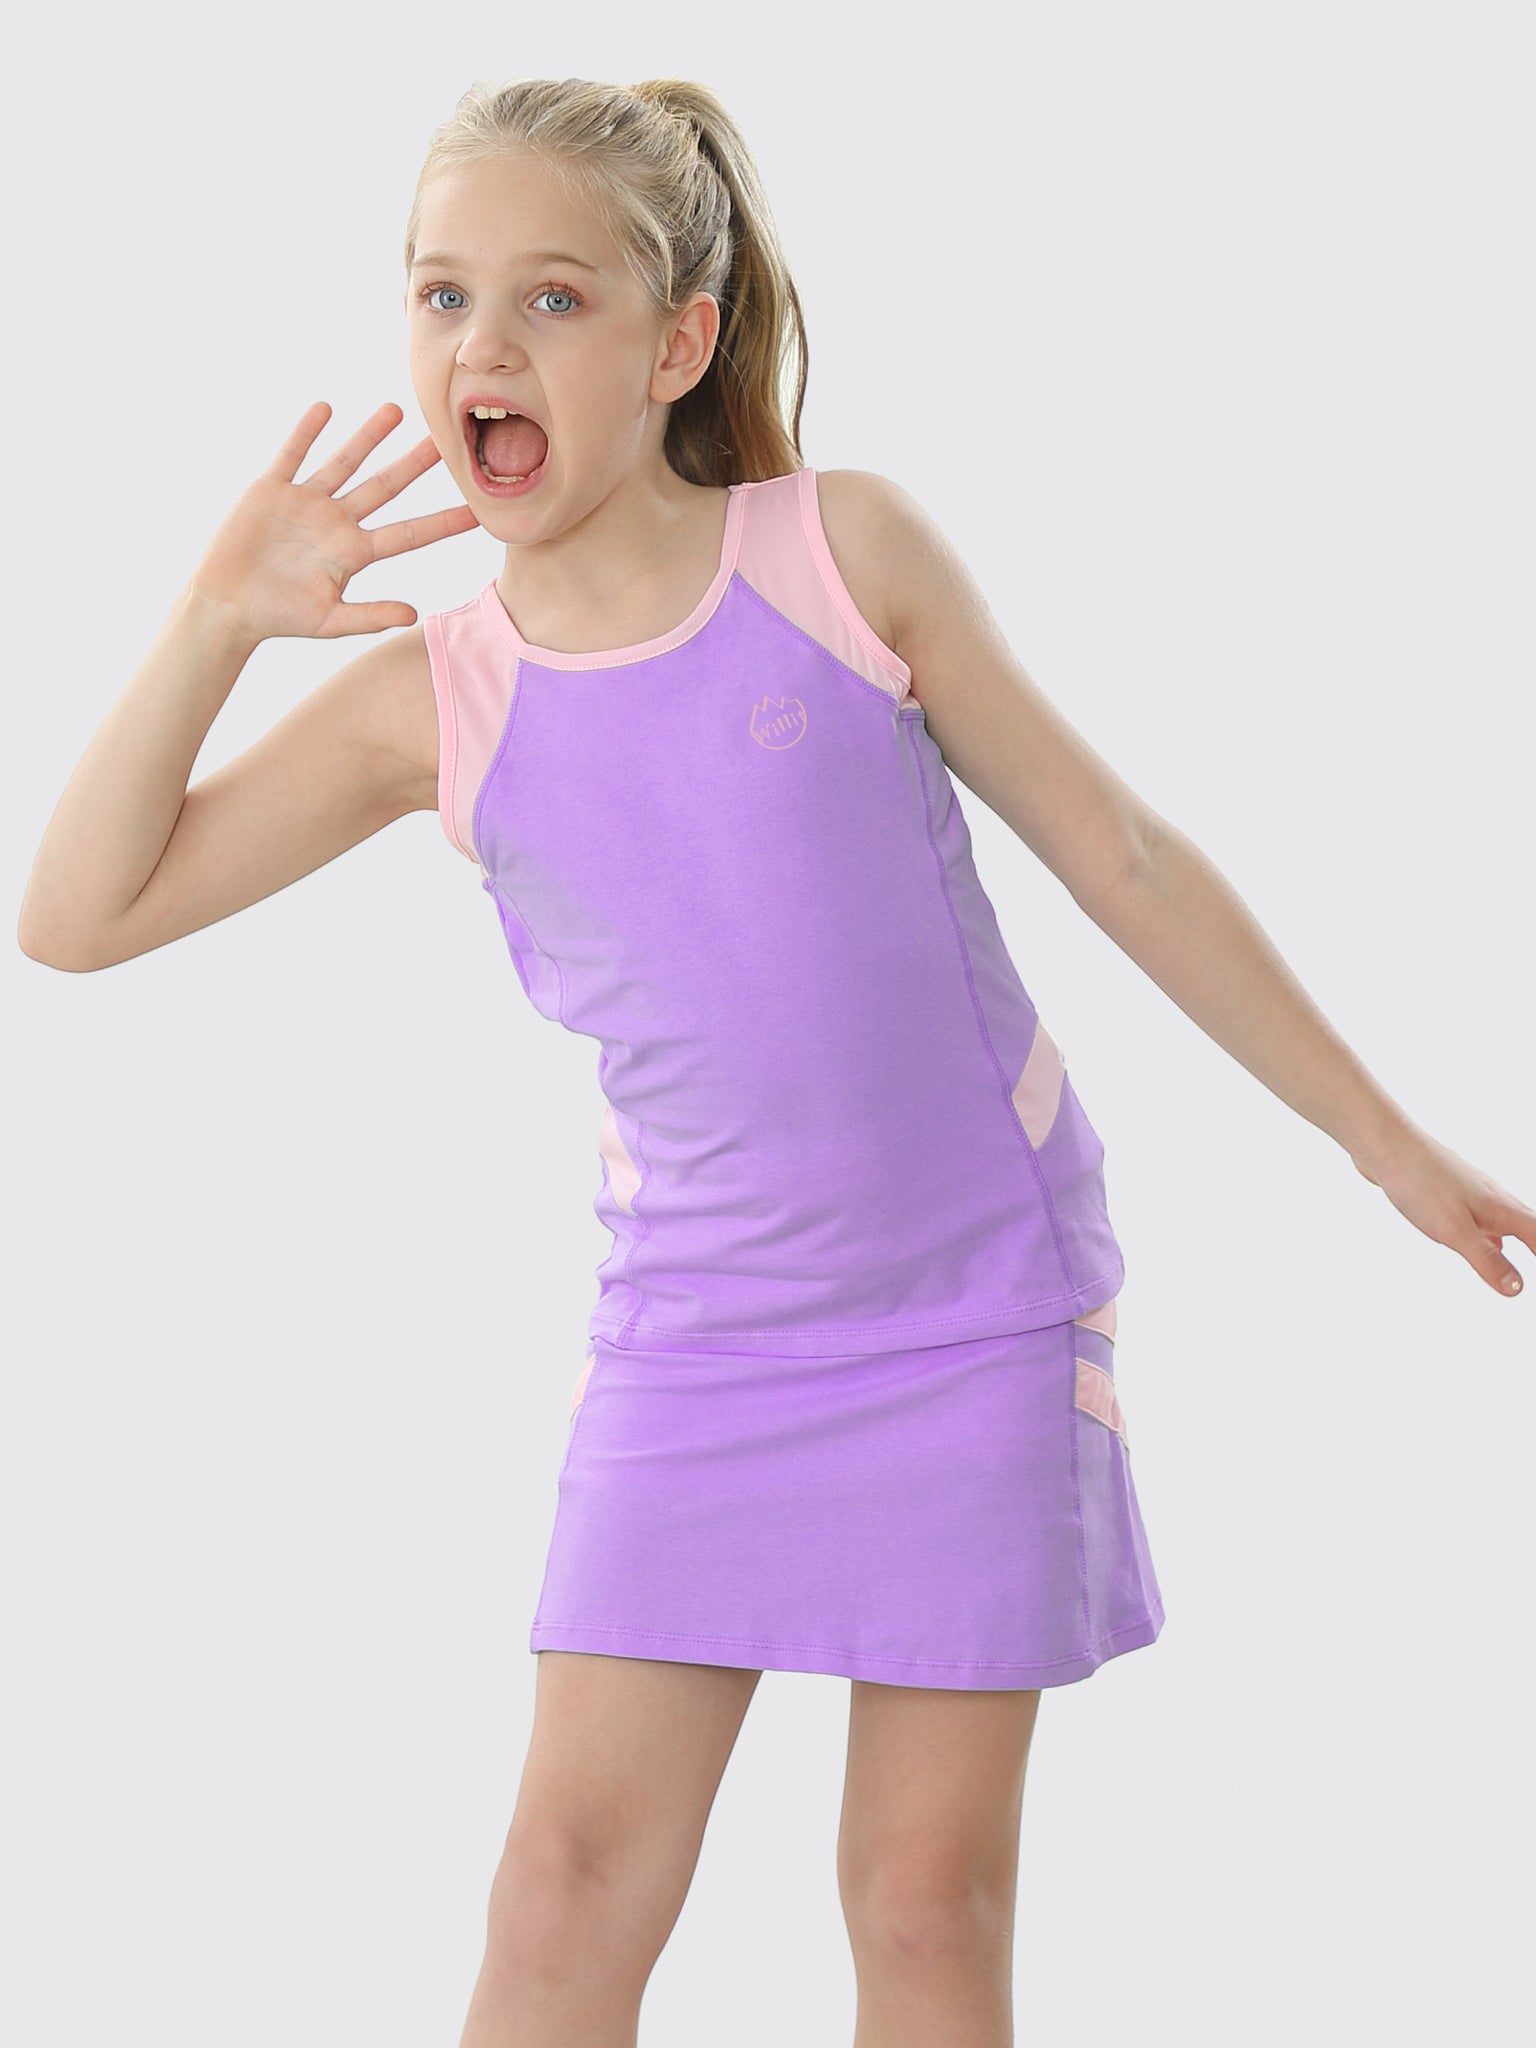 Willit Girls' Tennis Outfit_LightPurple_model1